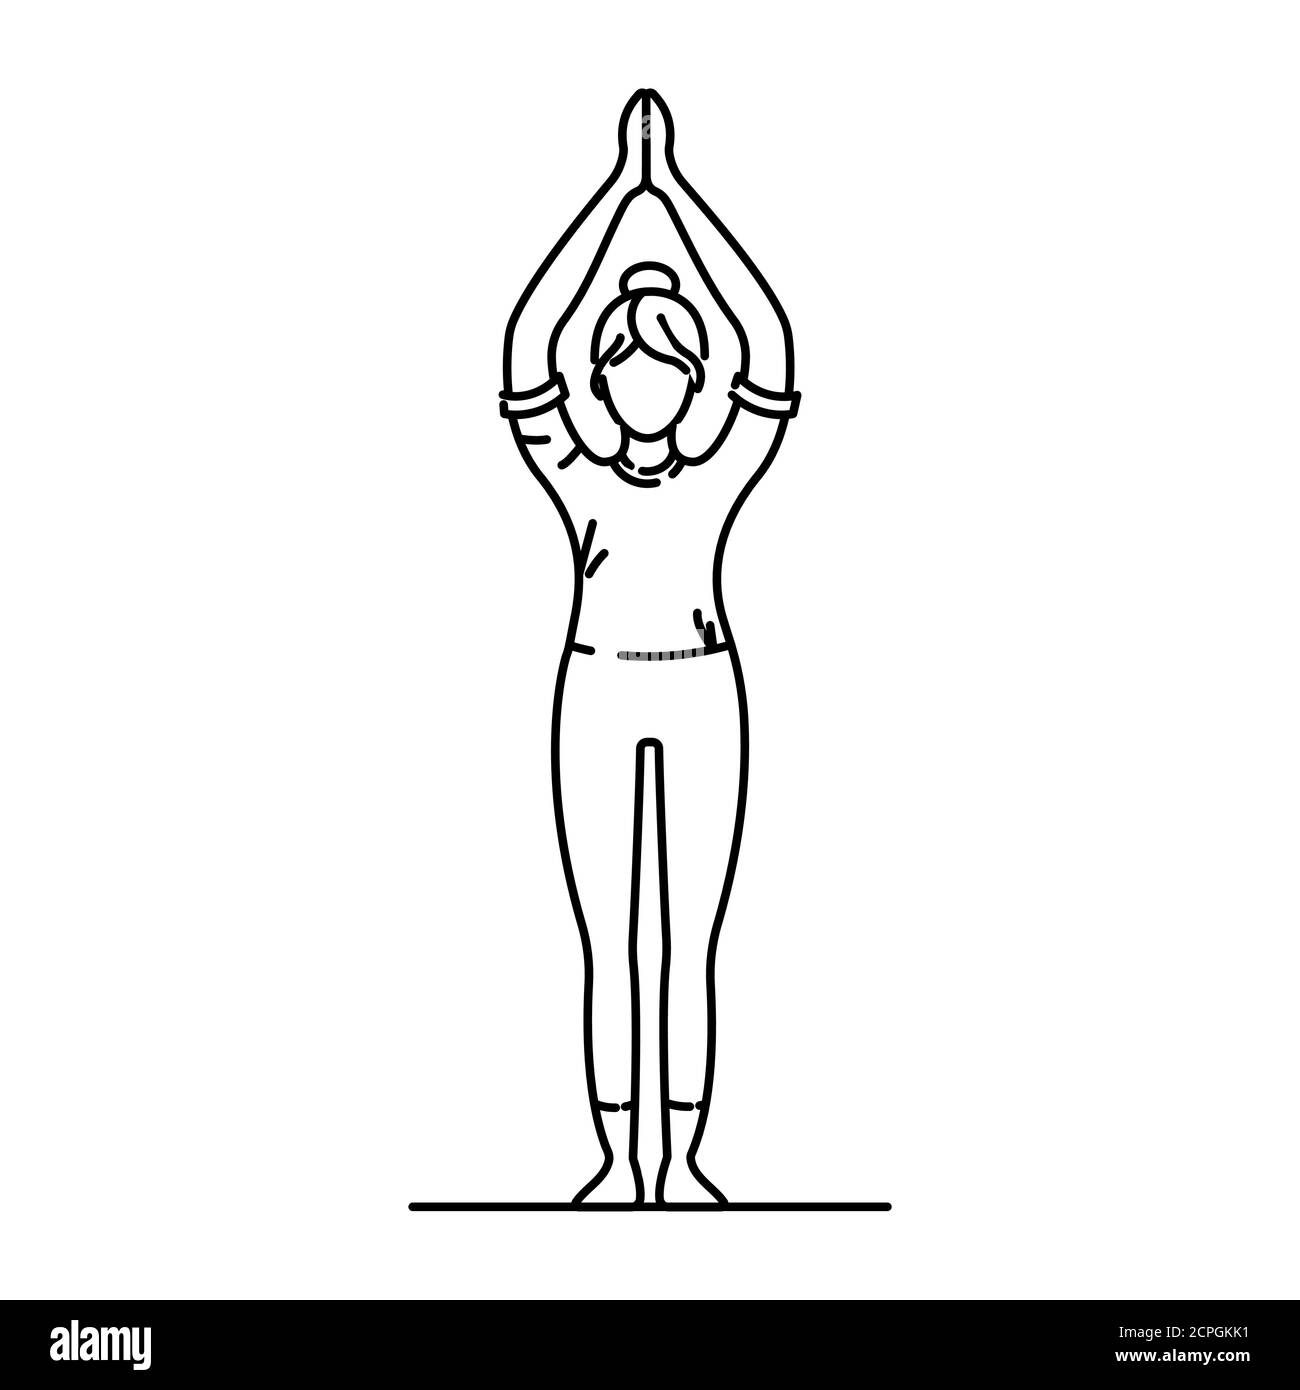 Practice tadasana ( mountain pose ) to improve your posture.